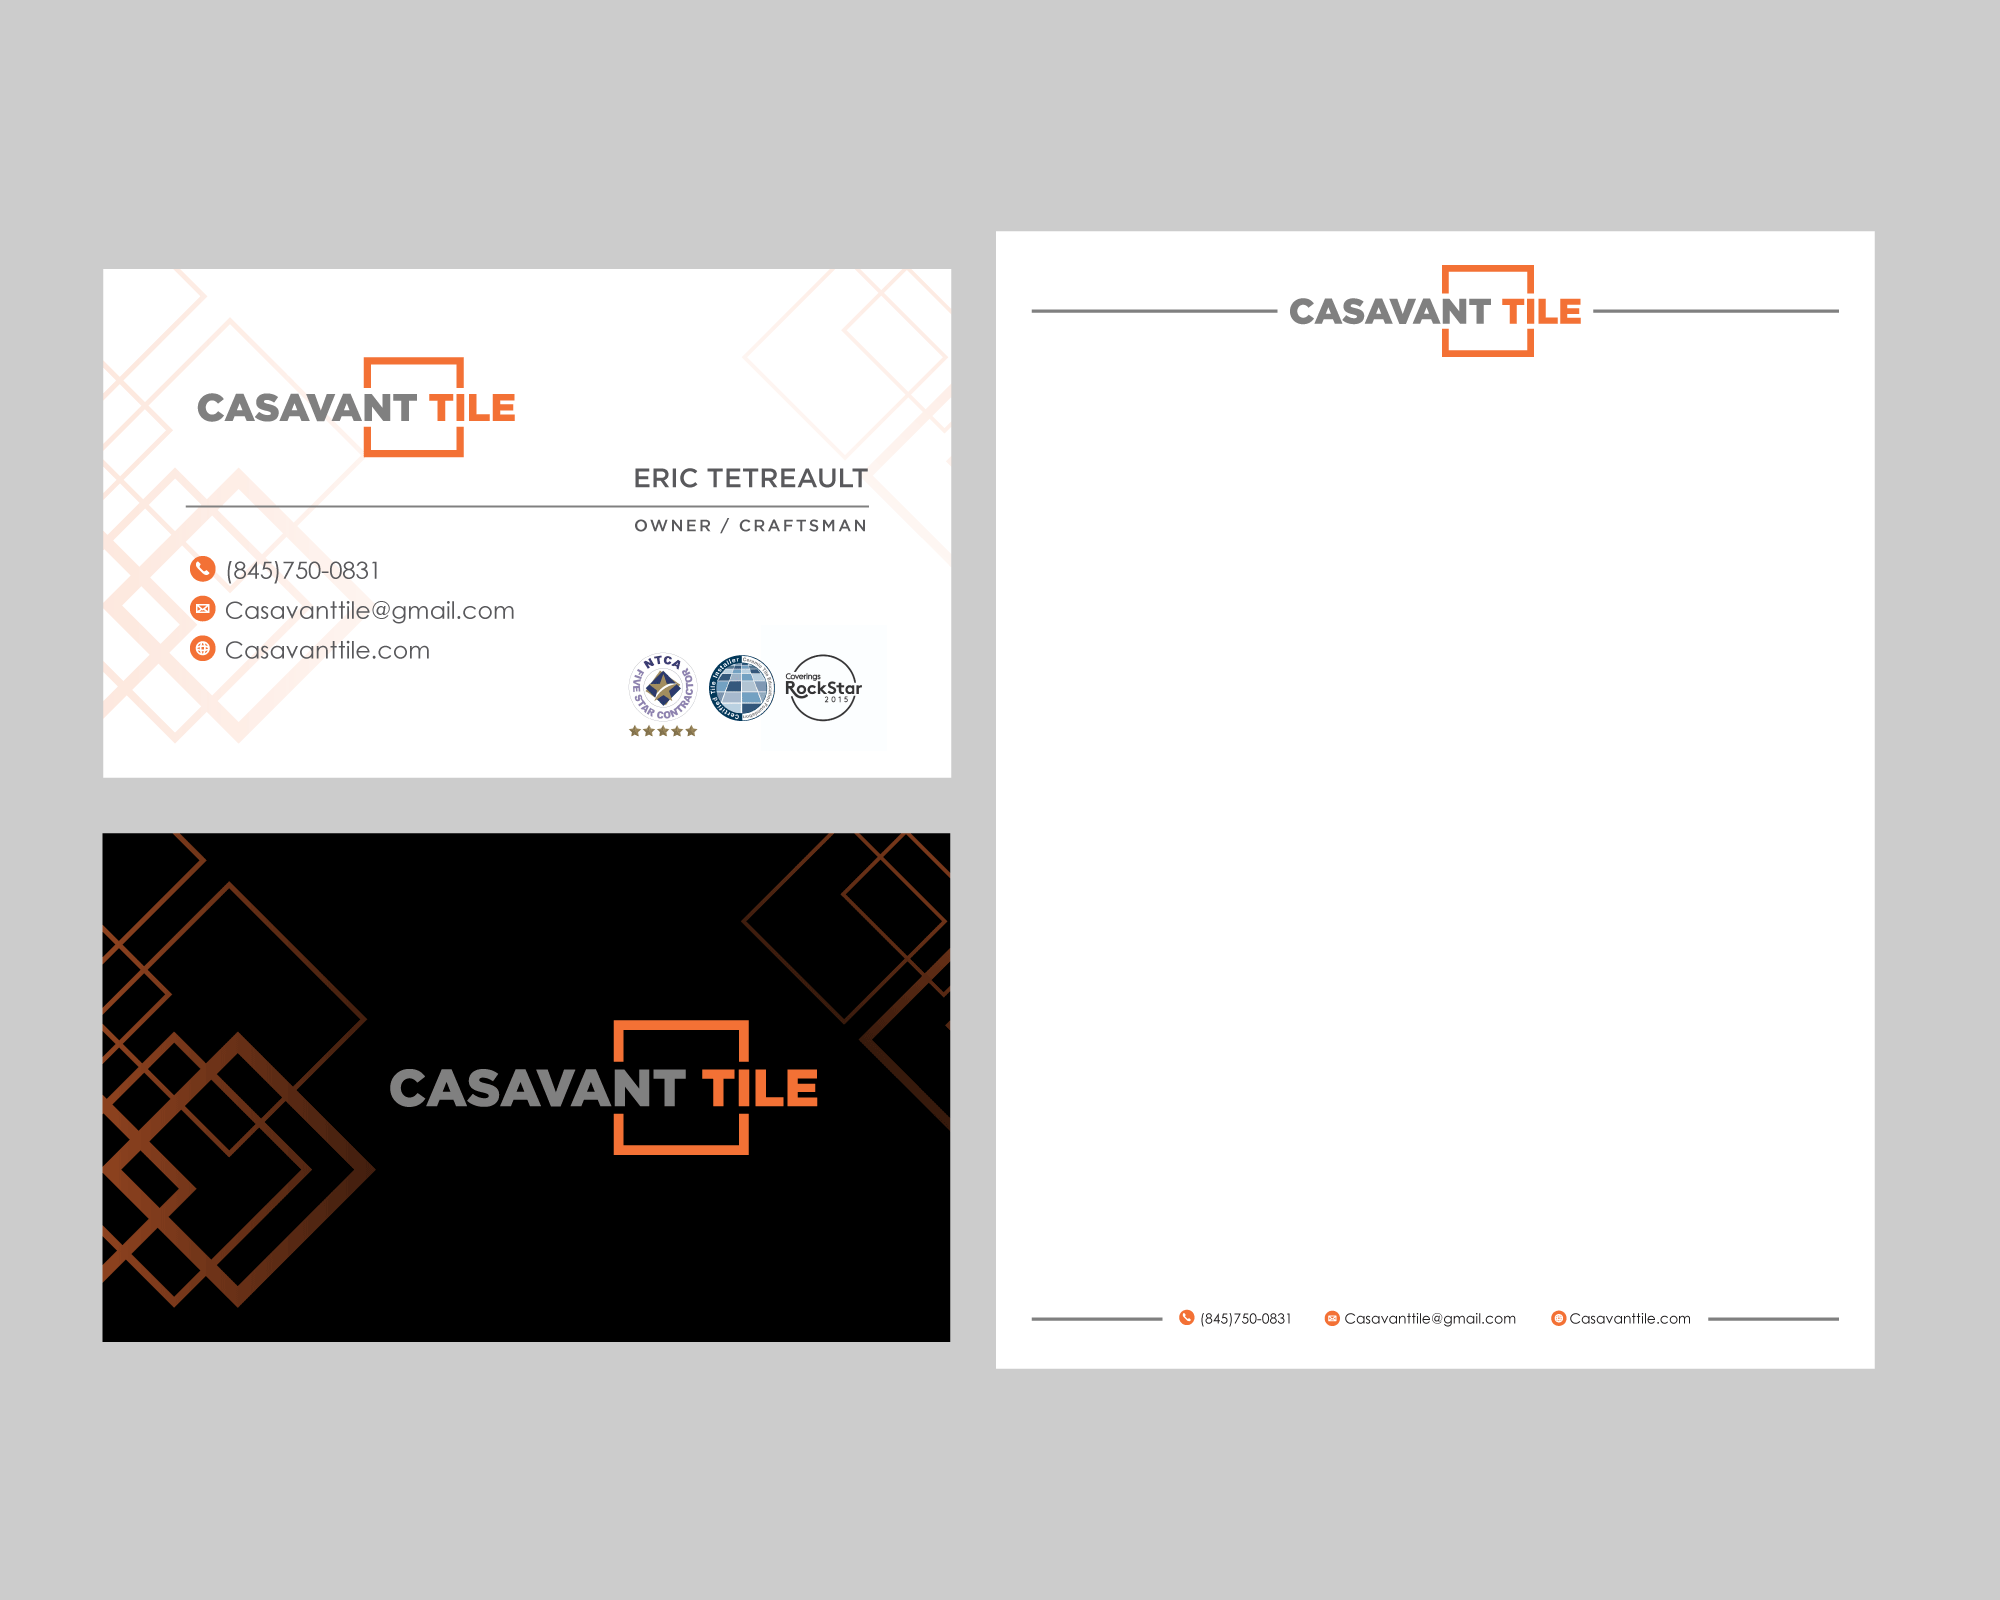 Business Card & Stationery Design entry 1776402 submitted by dsdezign to the Business Card & Stationery Design for Casavant Tile run by CasavantTile